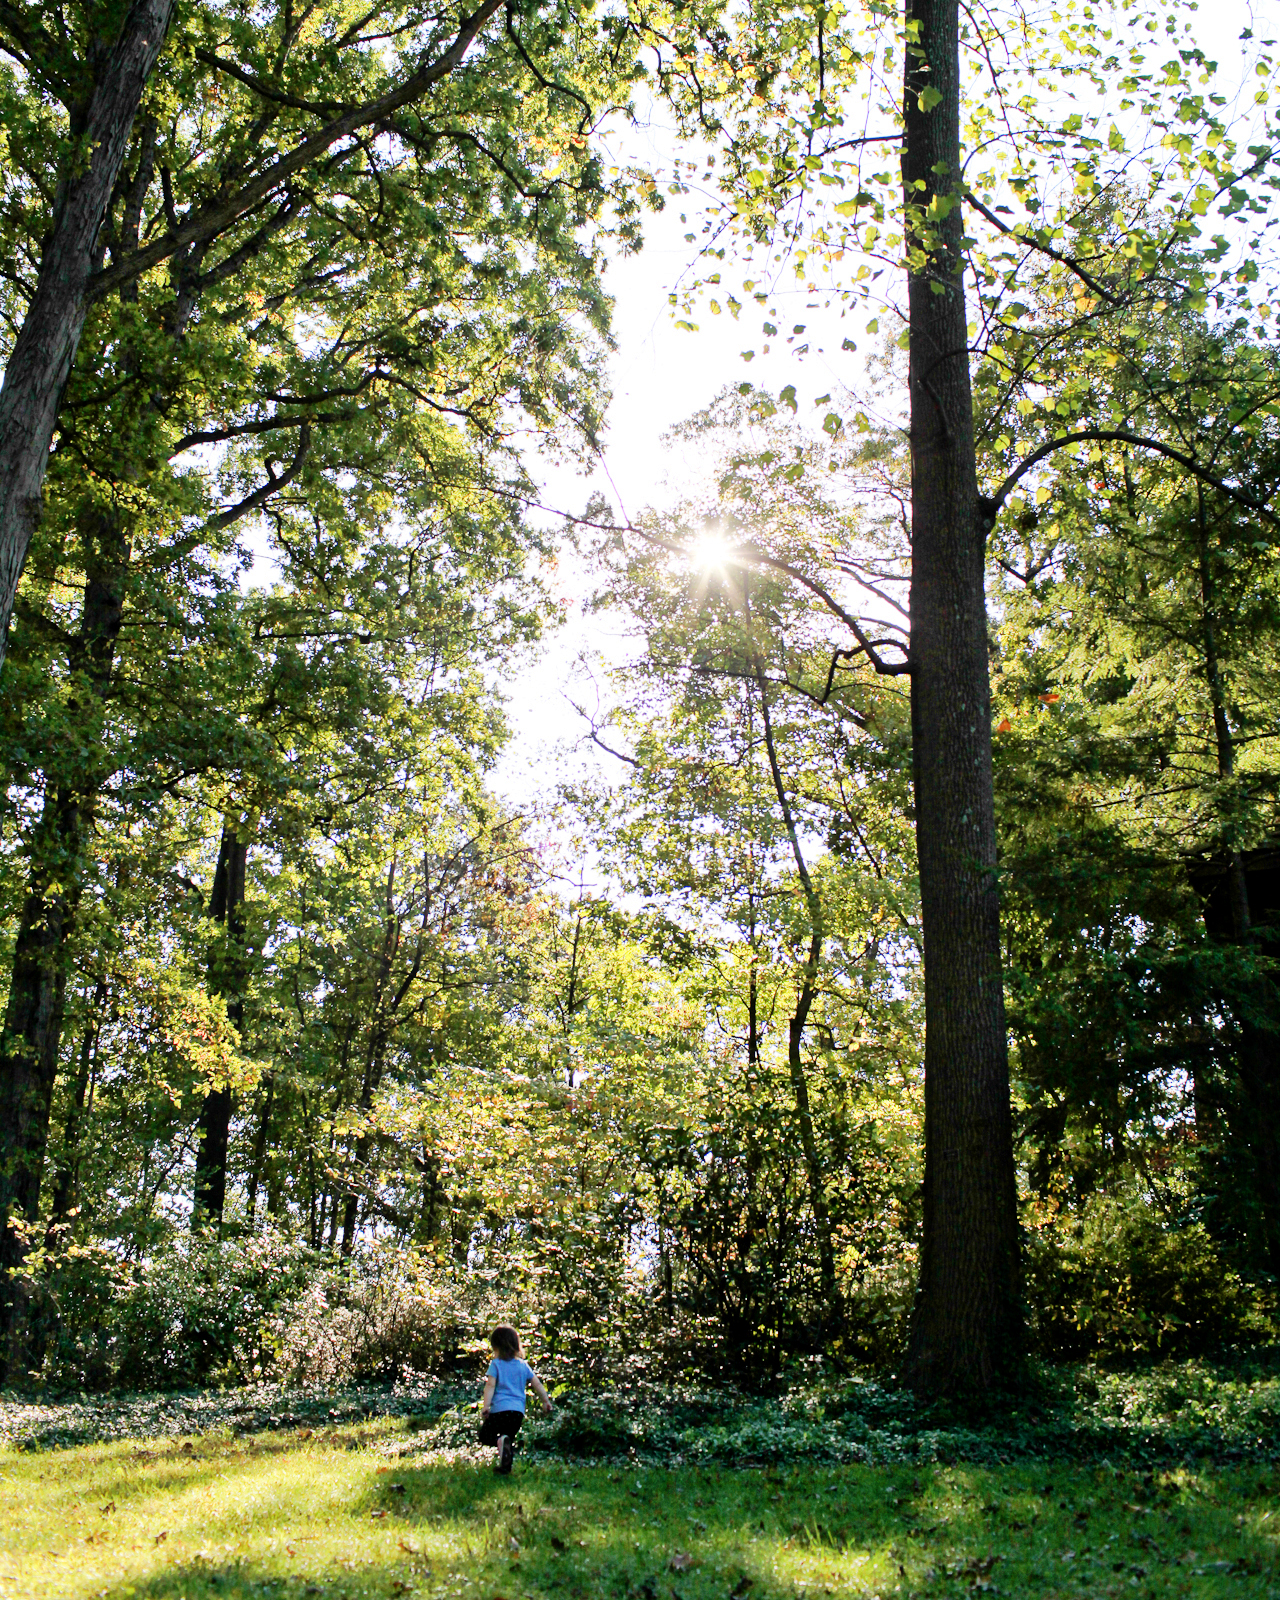 DC Guide - Fall Foliage Destinations: The National Arboretum